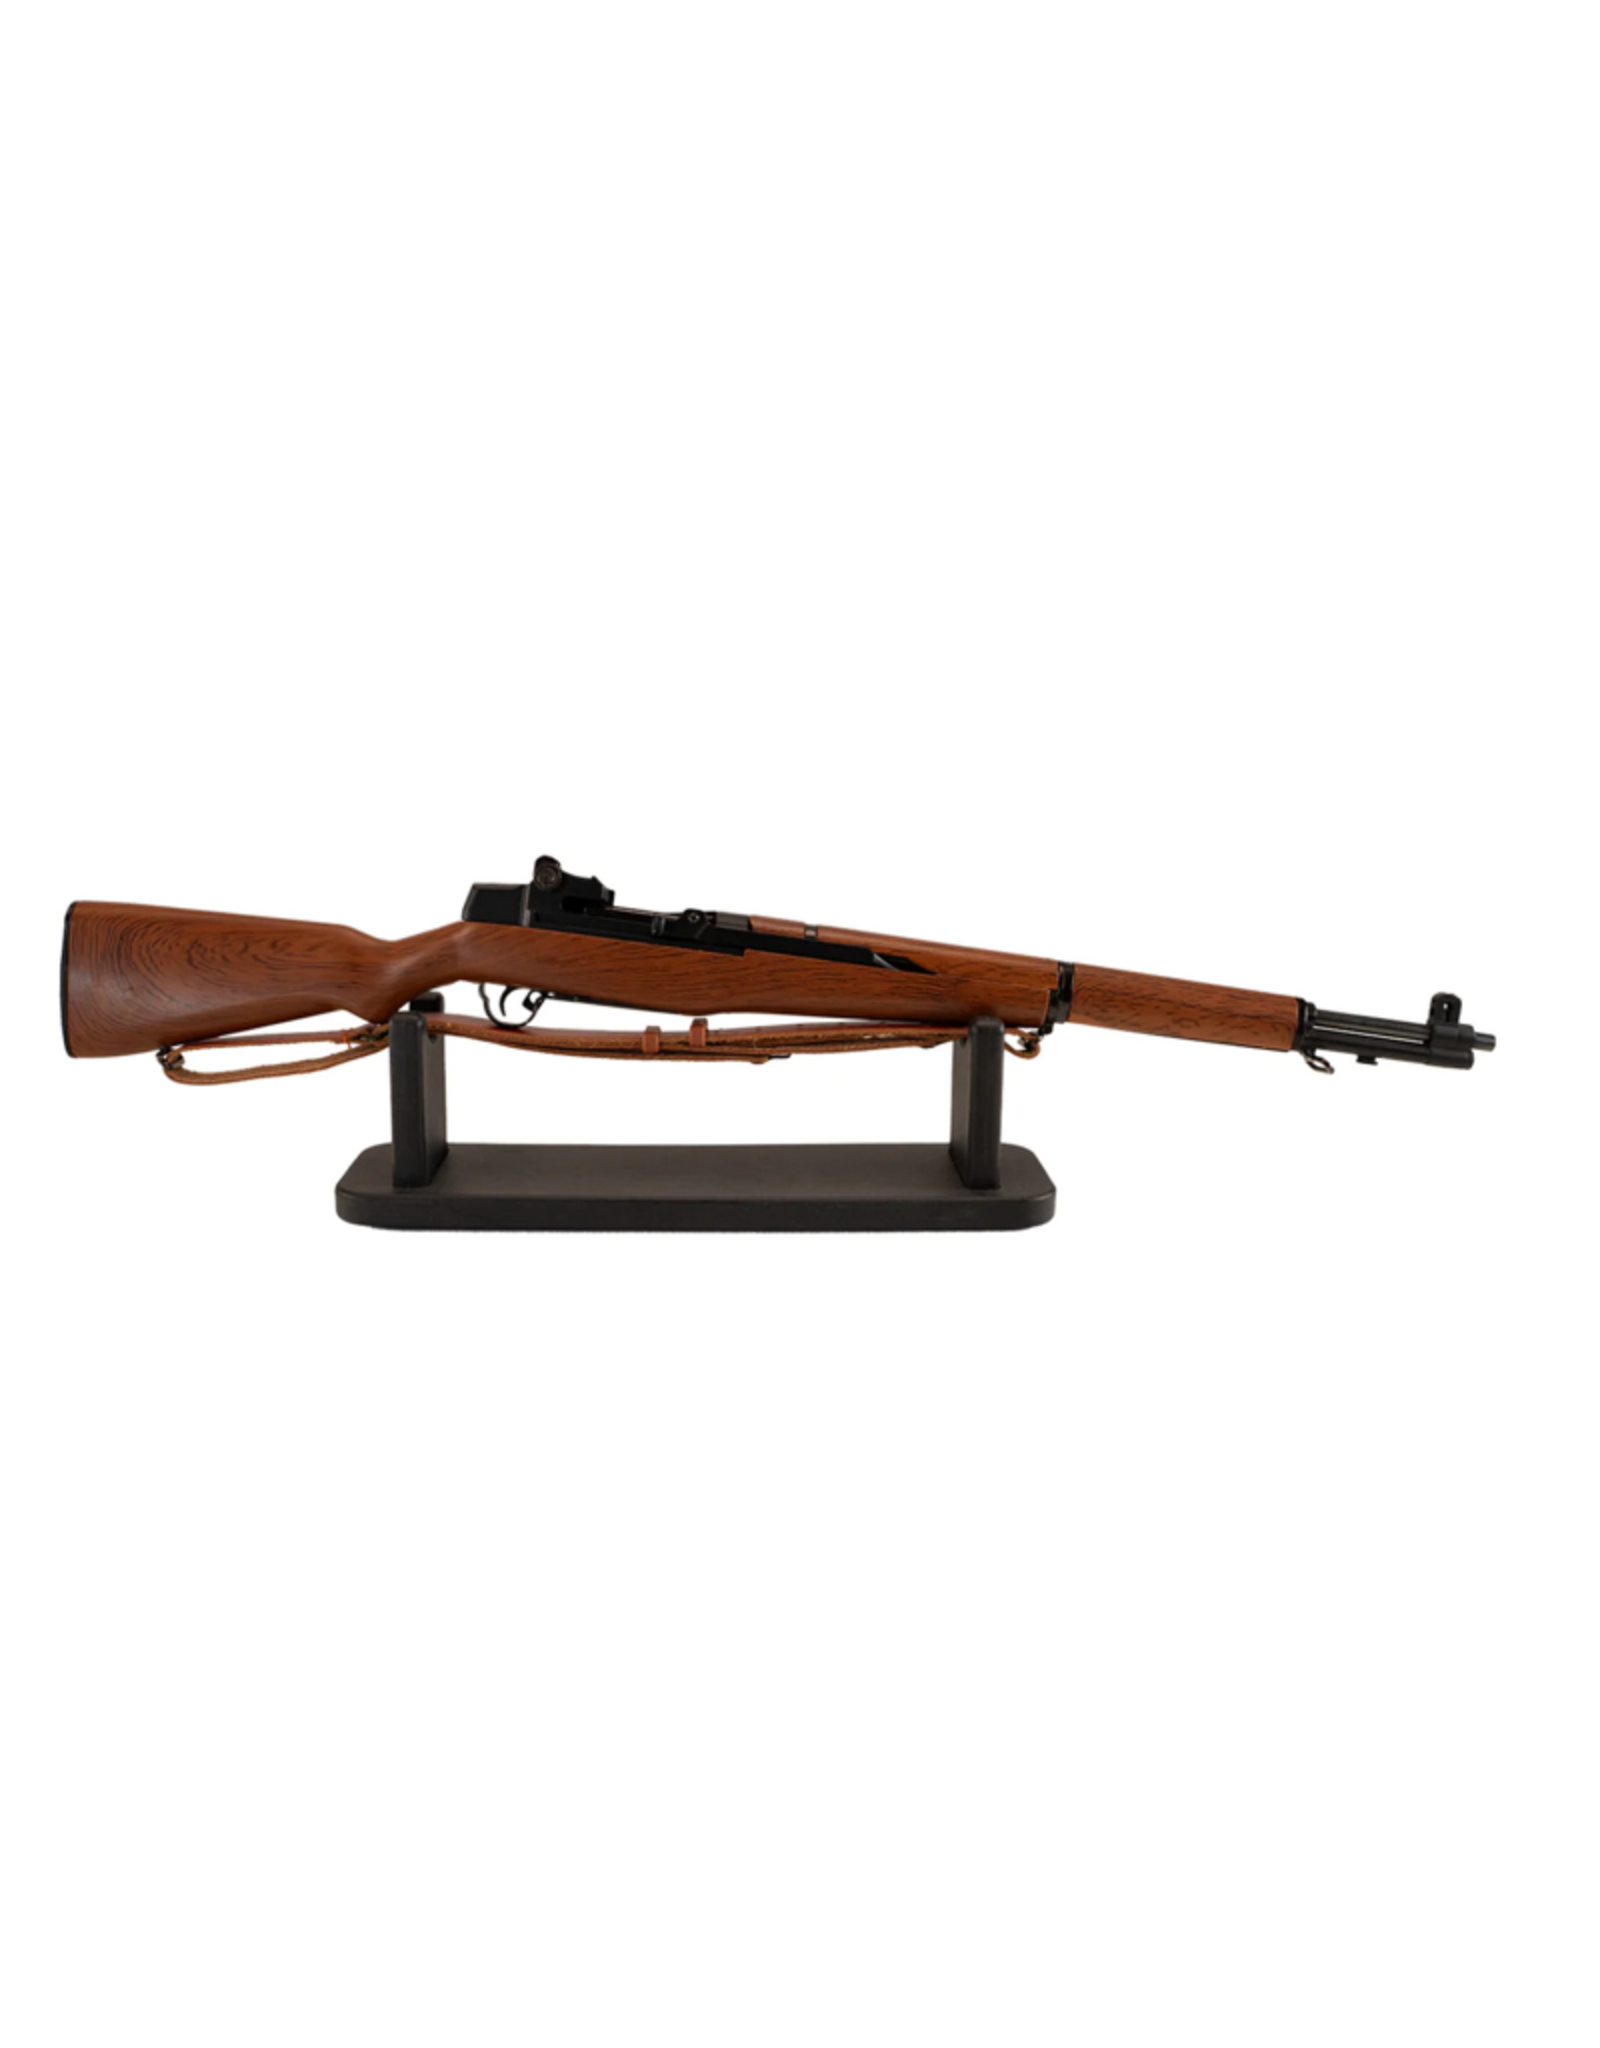 Goat Guns GG-M1 Garand Model 1:3 Scale Miniature